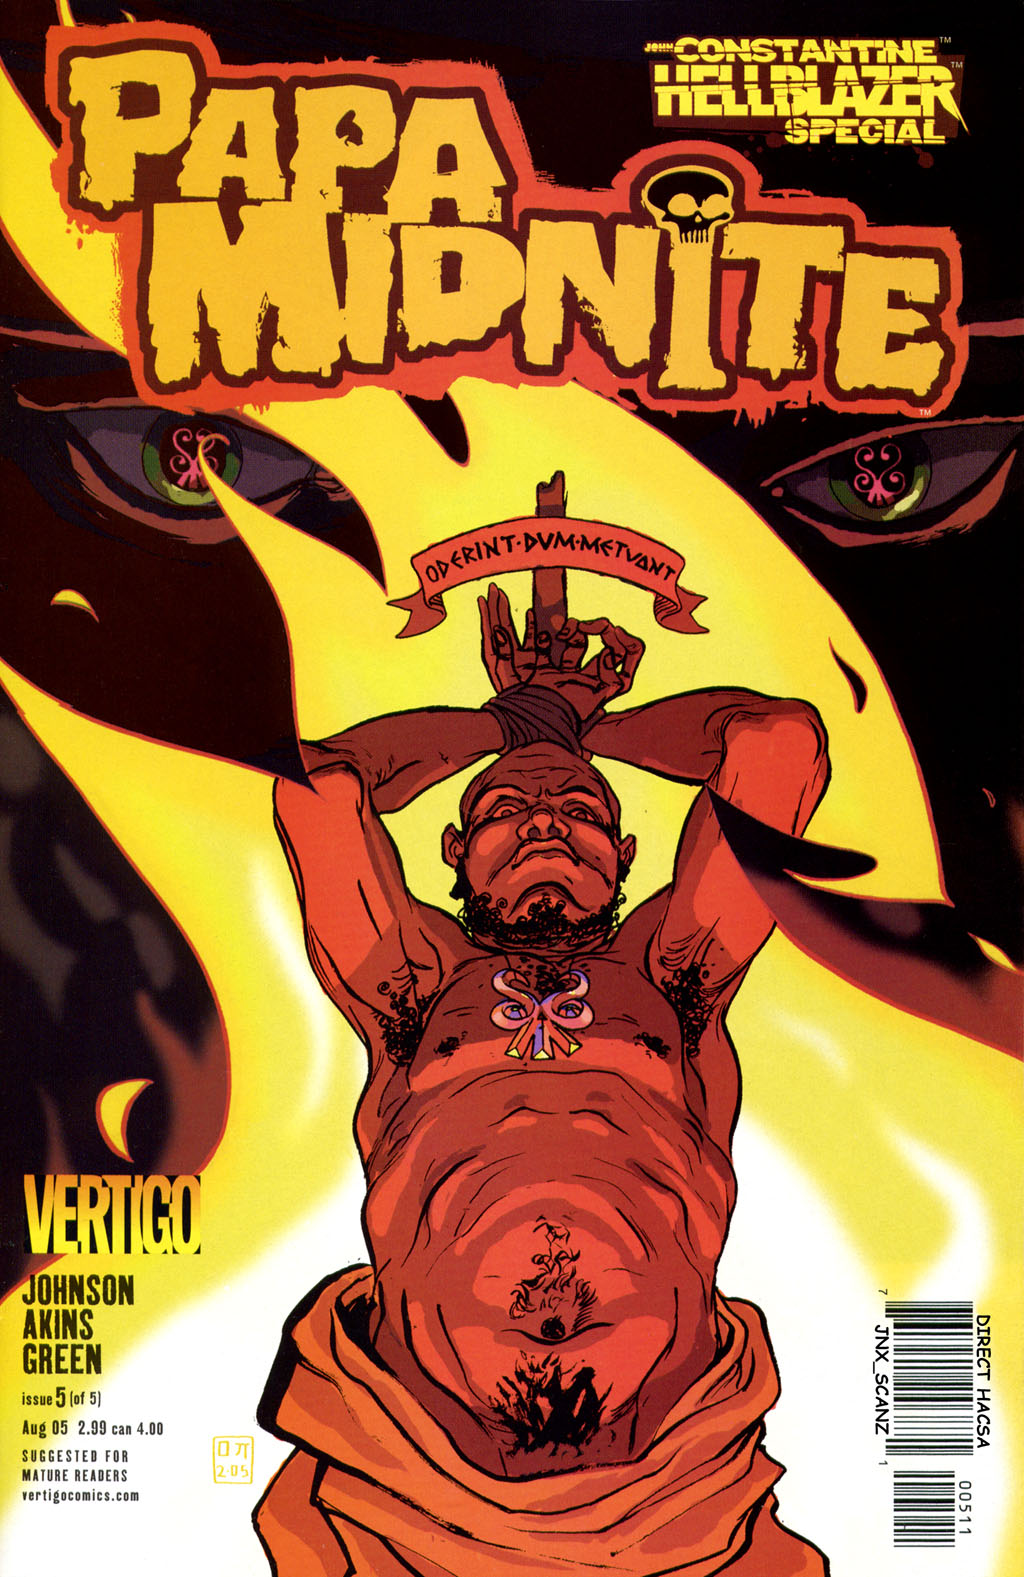 John Constantine - Hellblazer Special: Papa Midnite issue 5 - Page 1